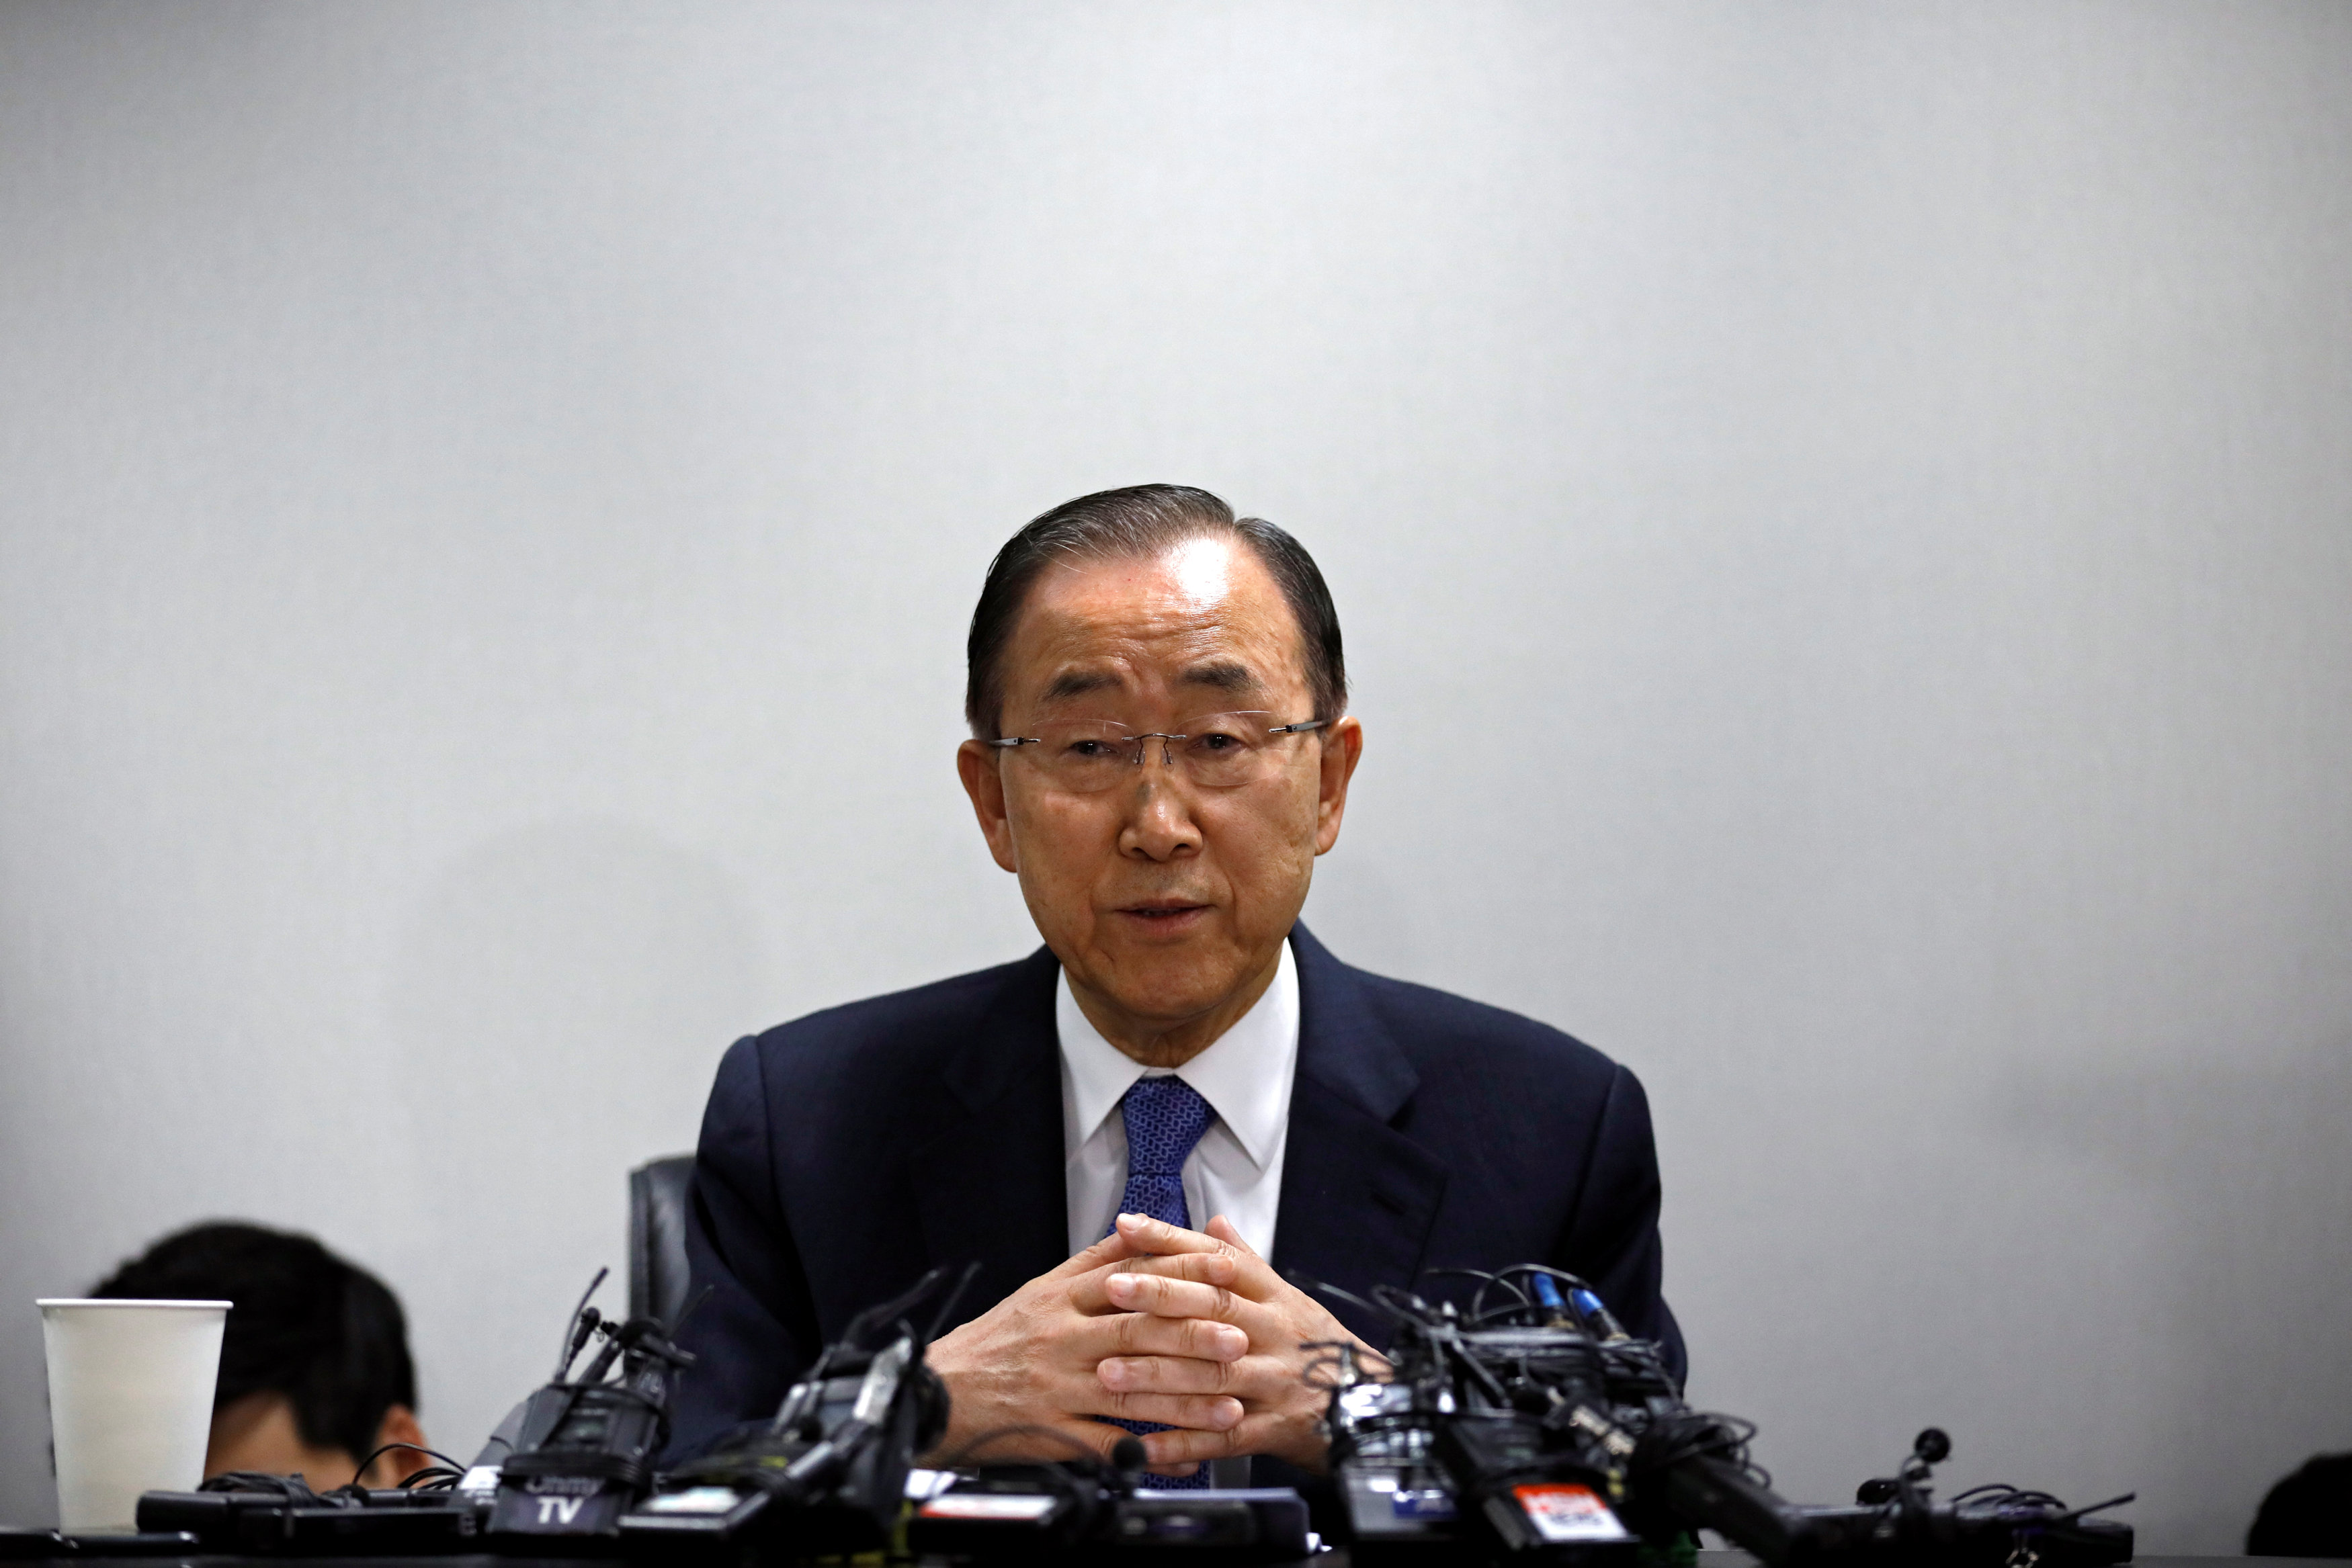 O Μπαν Γκι-Μουν δεν θα διεκδικήσει, μετά τον ΟΗΕ, την προεδρία της Νοτίου Κορέας